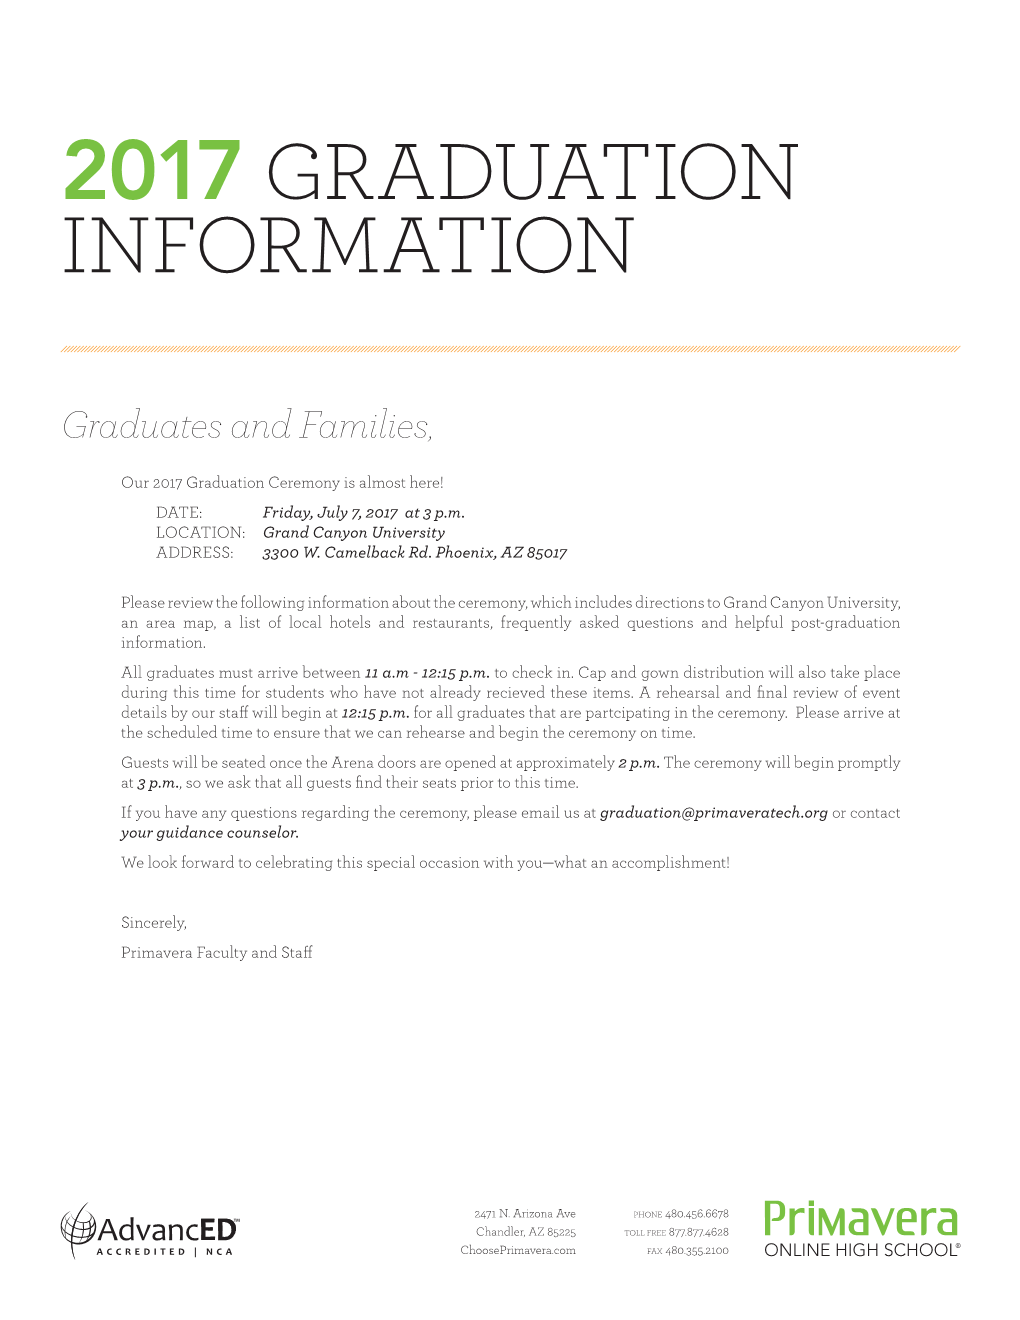 2017 Graduation Information